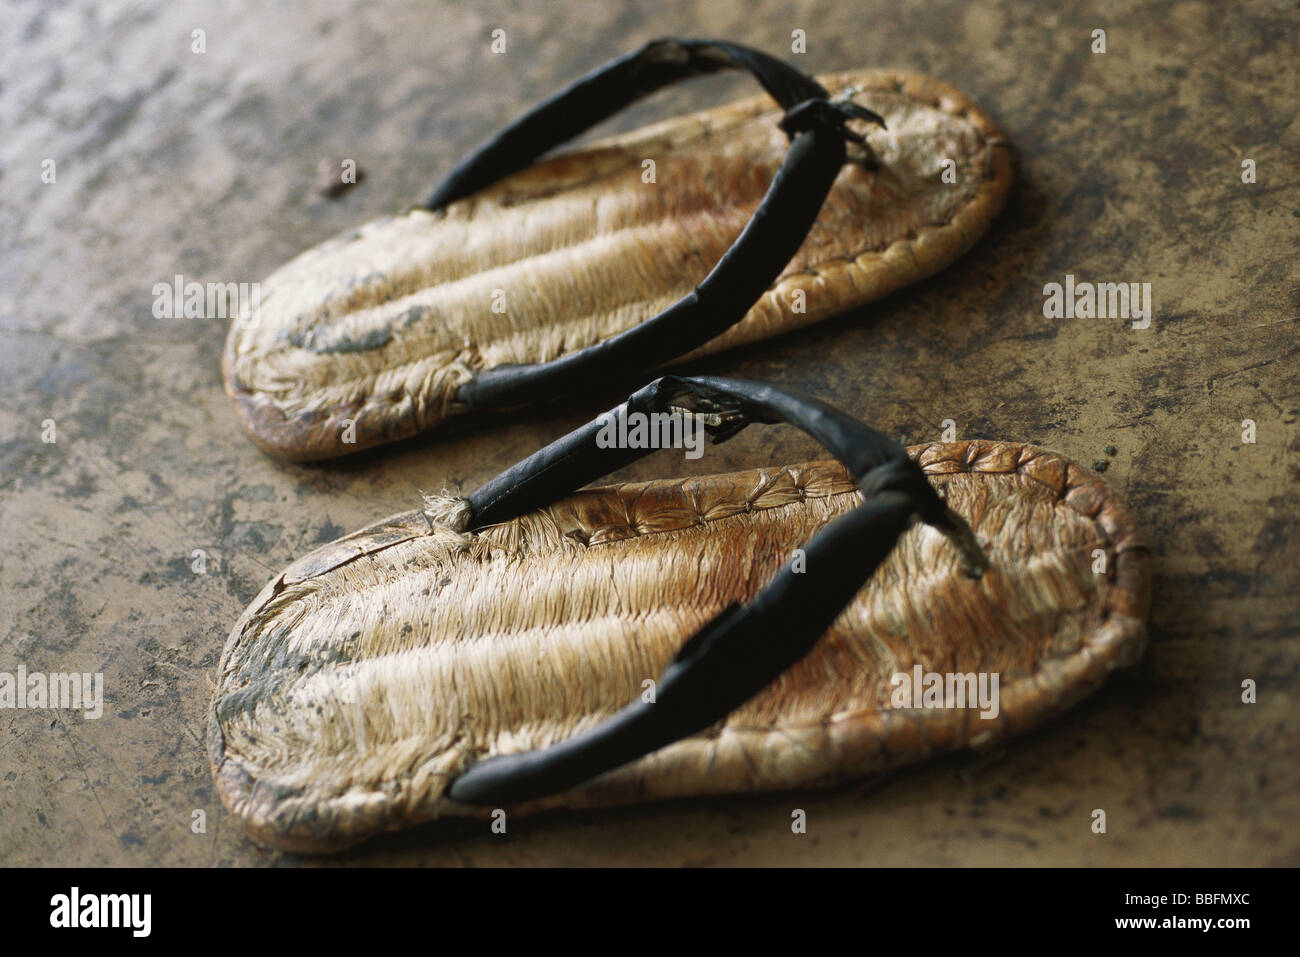 Pair of straw sandals Stock Photo - Alamy